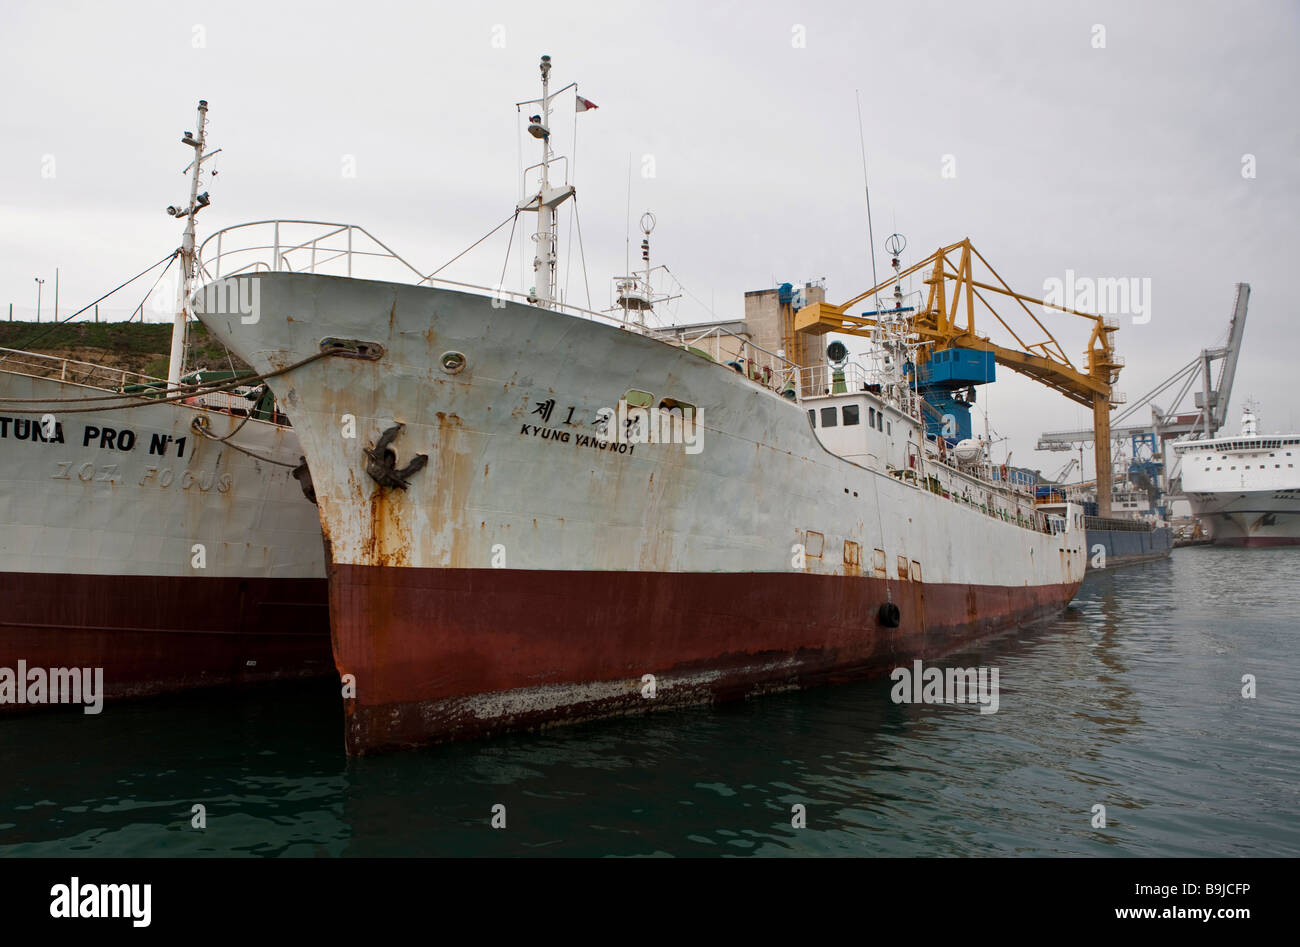 Peces japoneses confiscados de arrastreros que pescan en las aguas alrededor de Malta ilegalmente, Valletta, Malta, Europa Foto de stock